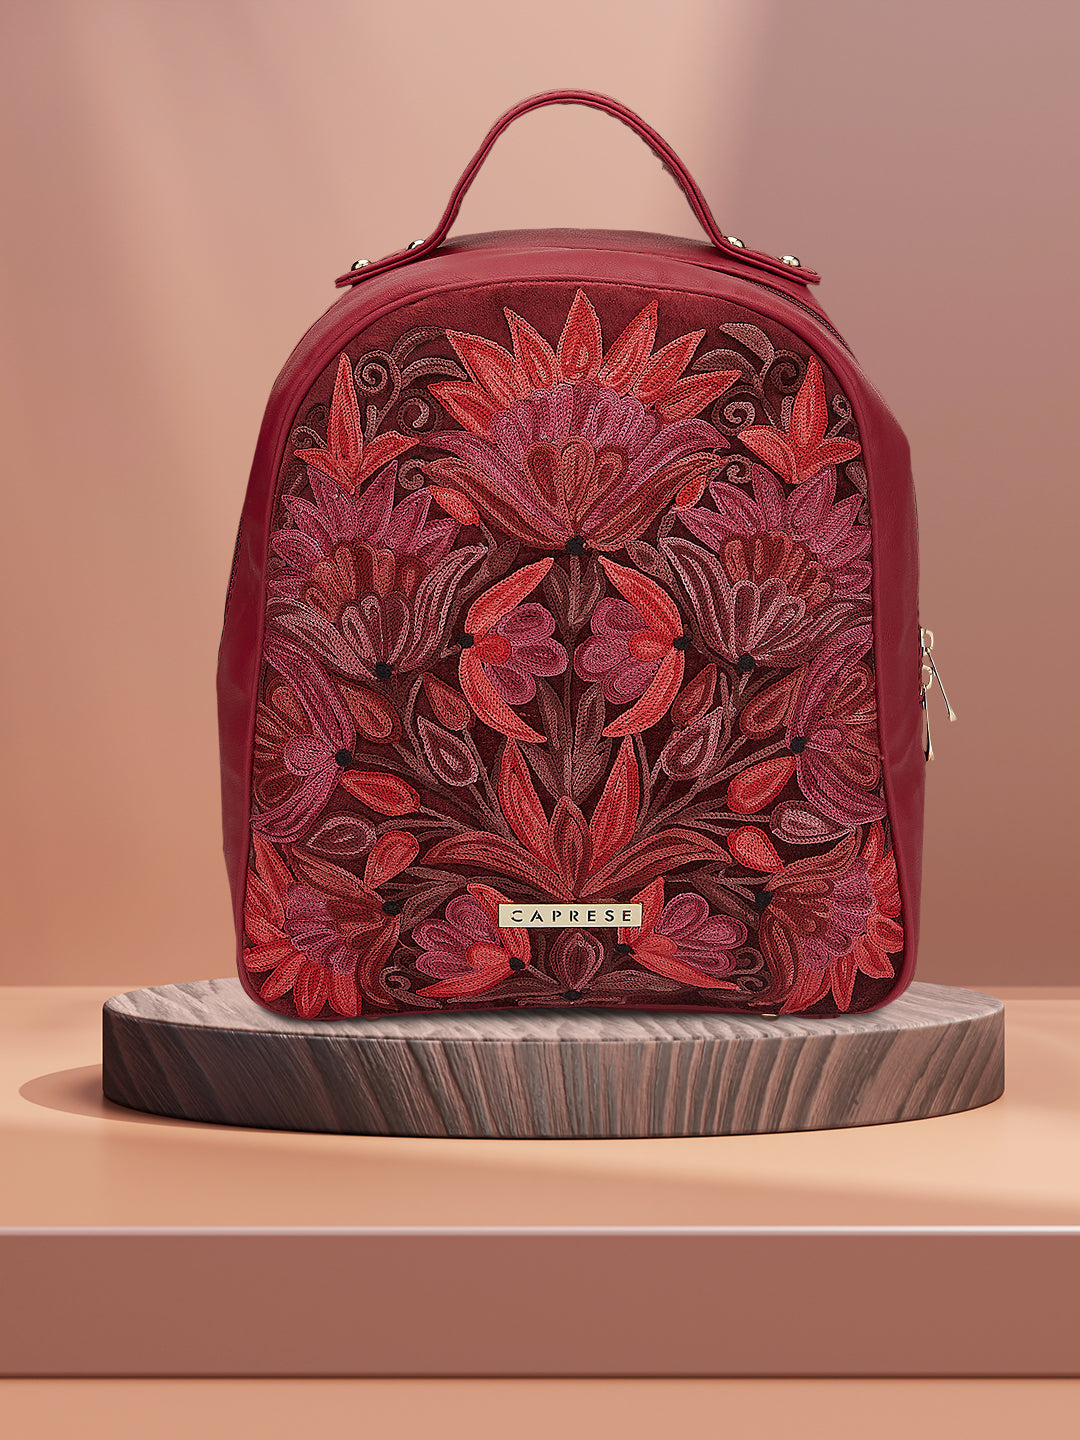 Boba Fett Floral Embroidered Purse Mini Backpack - Boba Fett Collectibles -  Boba Fett Fan Club